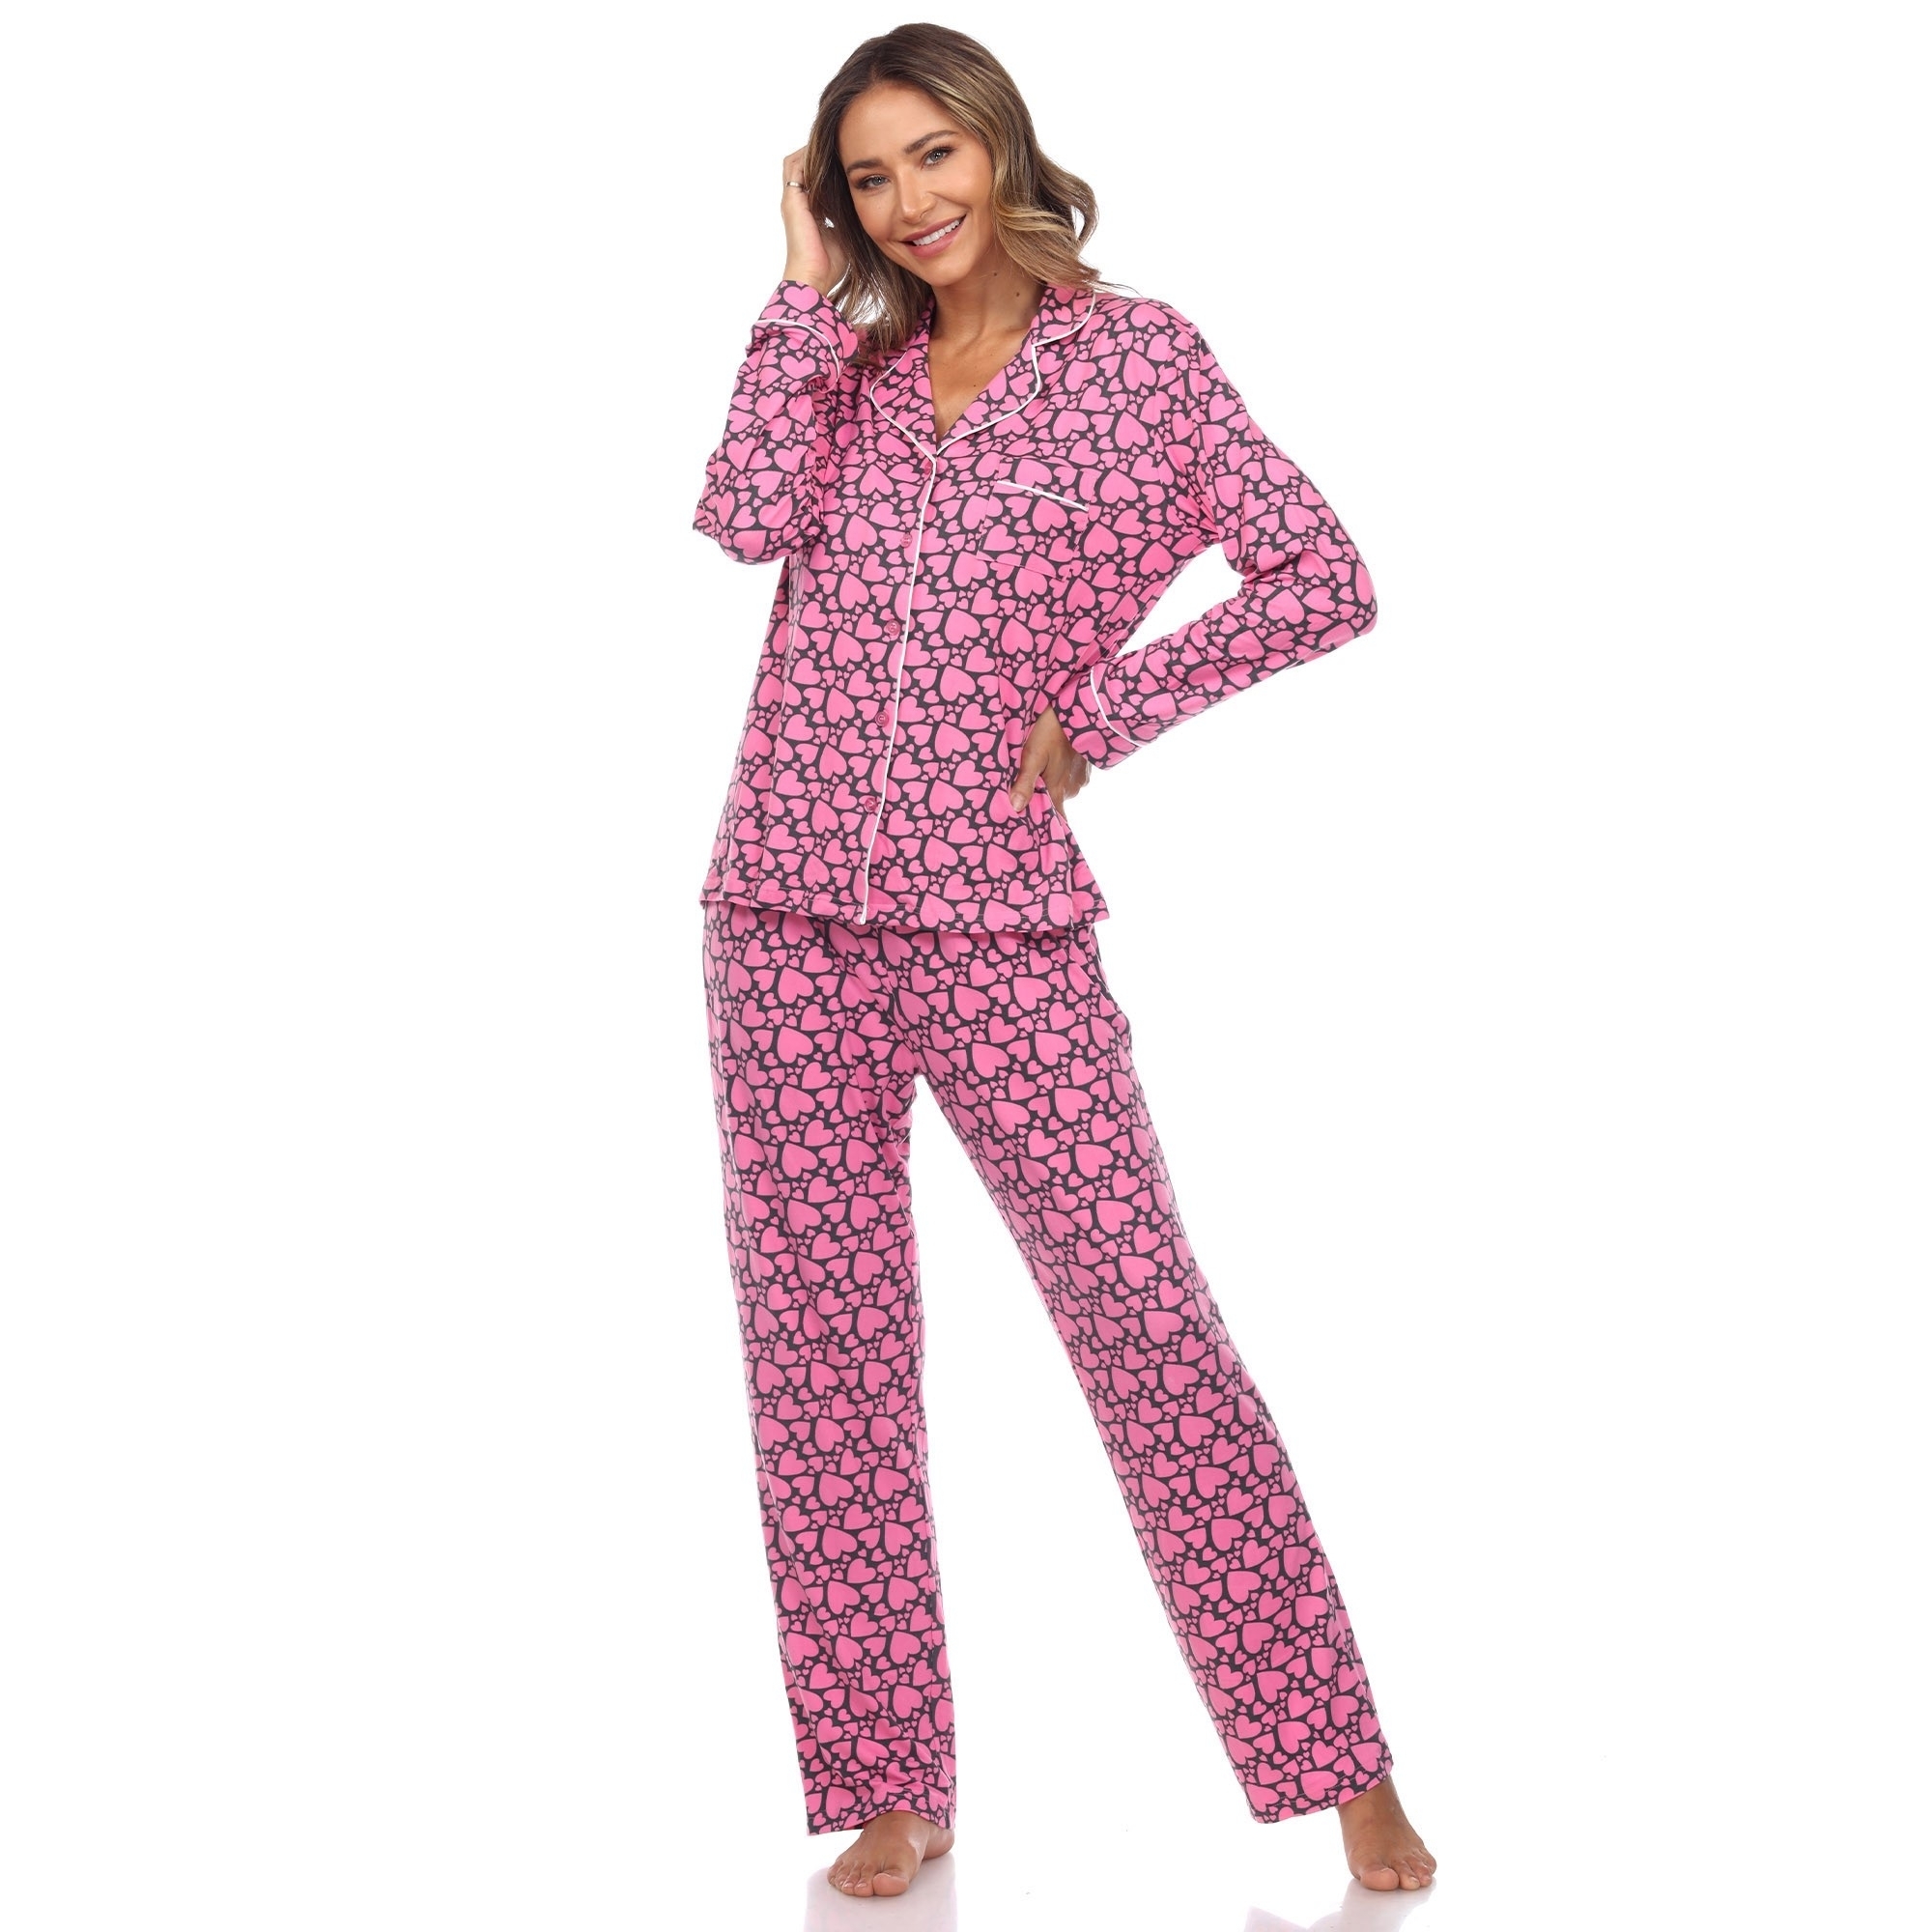 White Mark Women's Long Sleeve Hearts Pajama Set - Pink, 3X